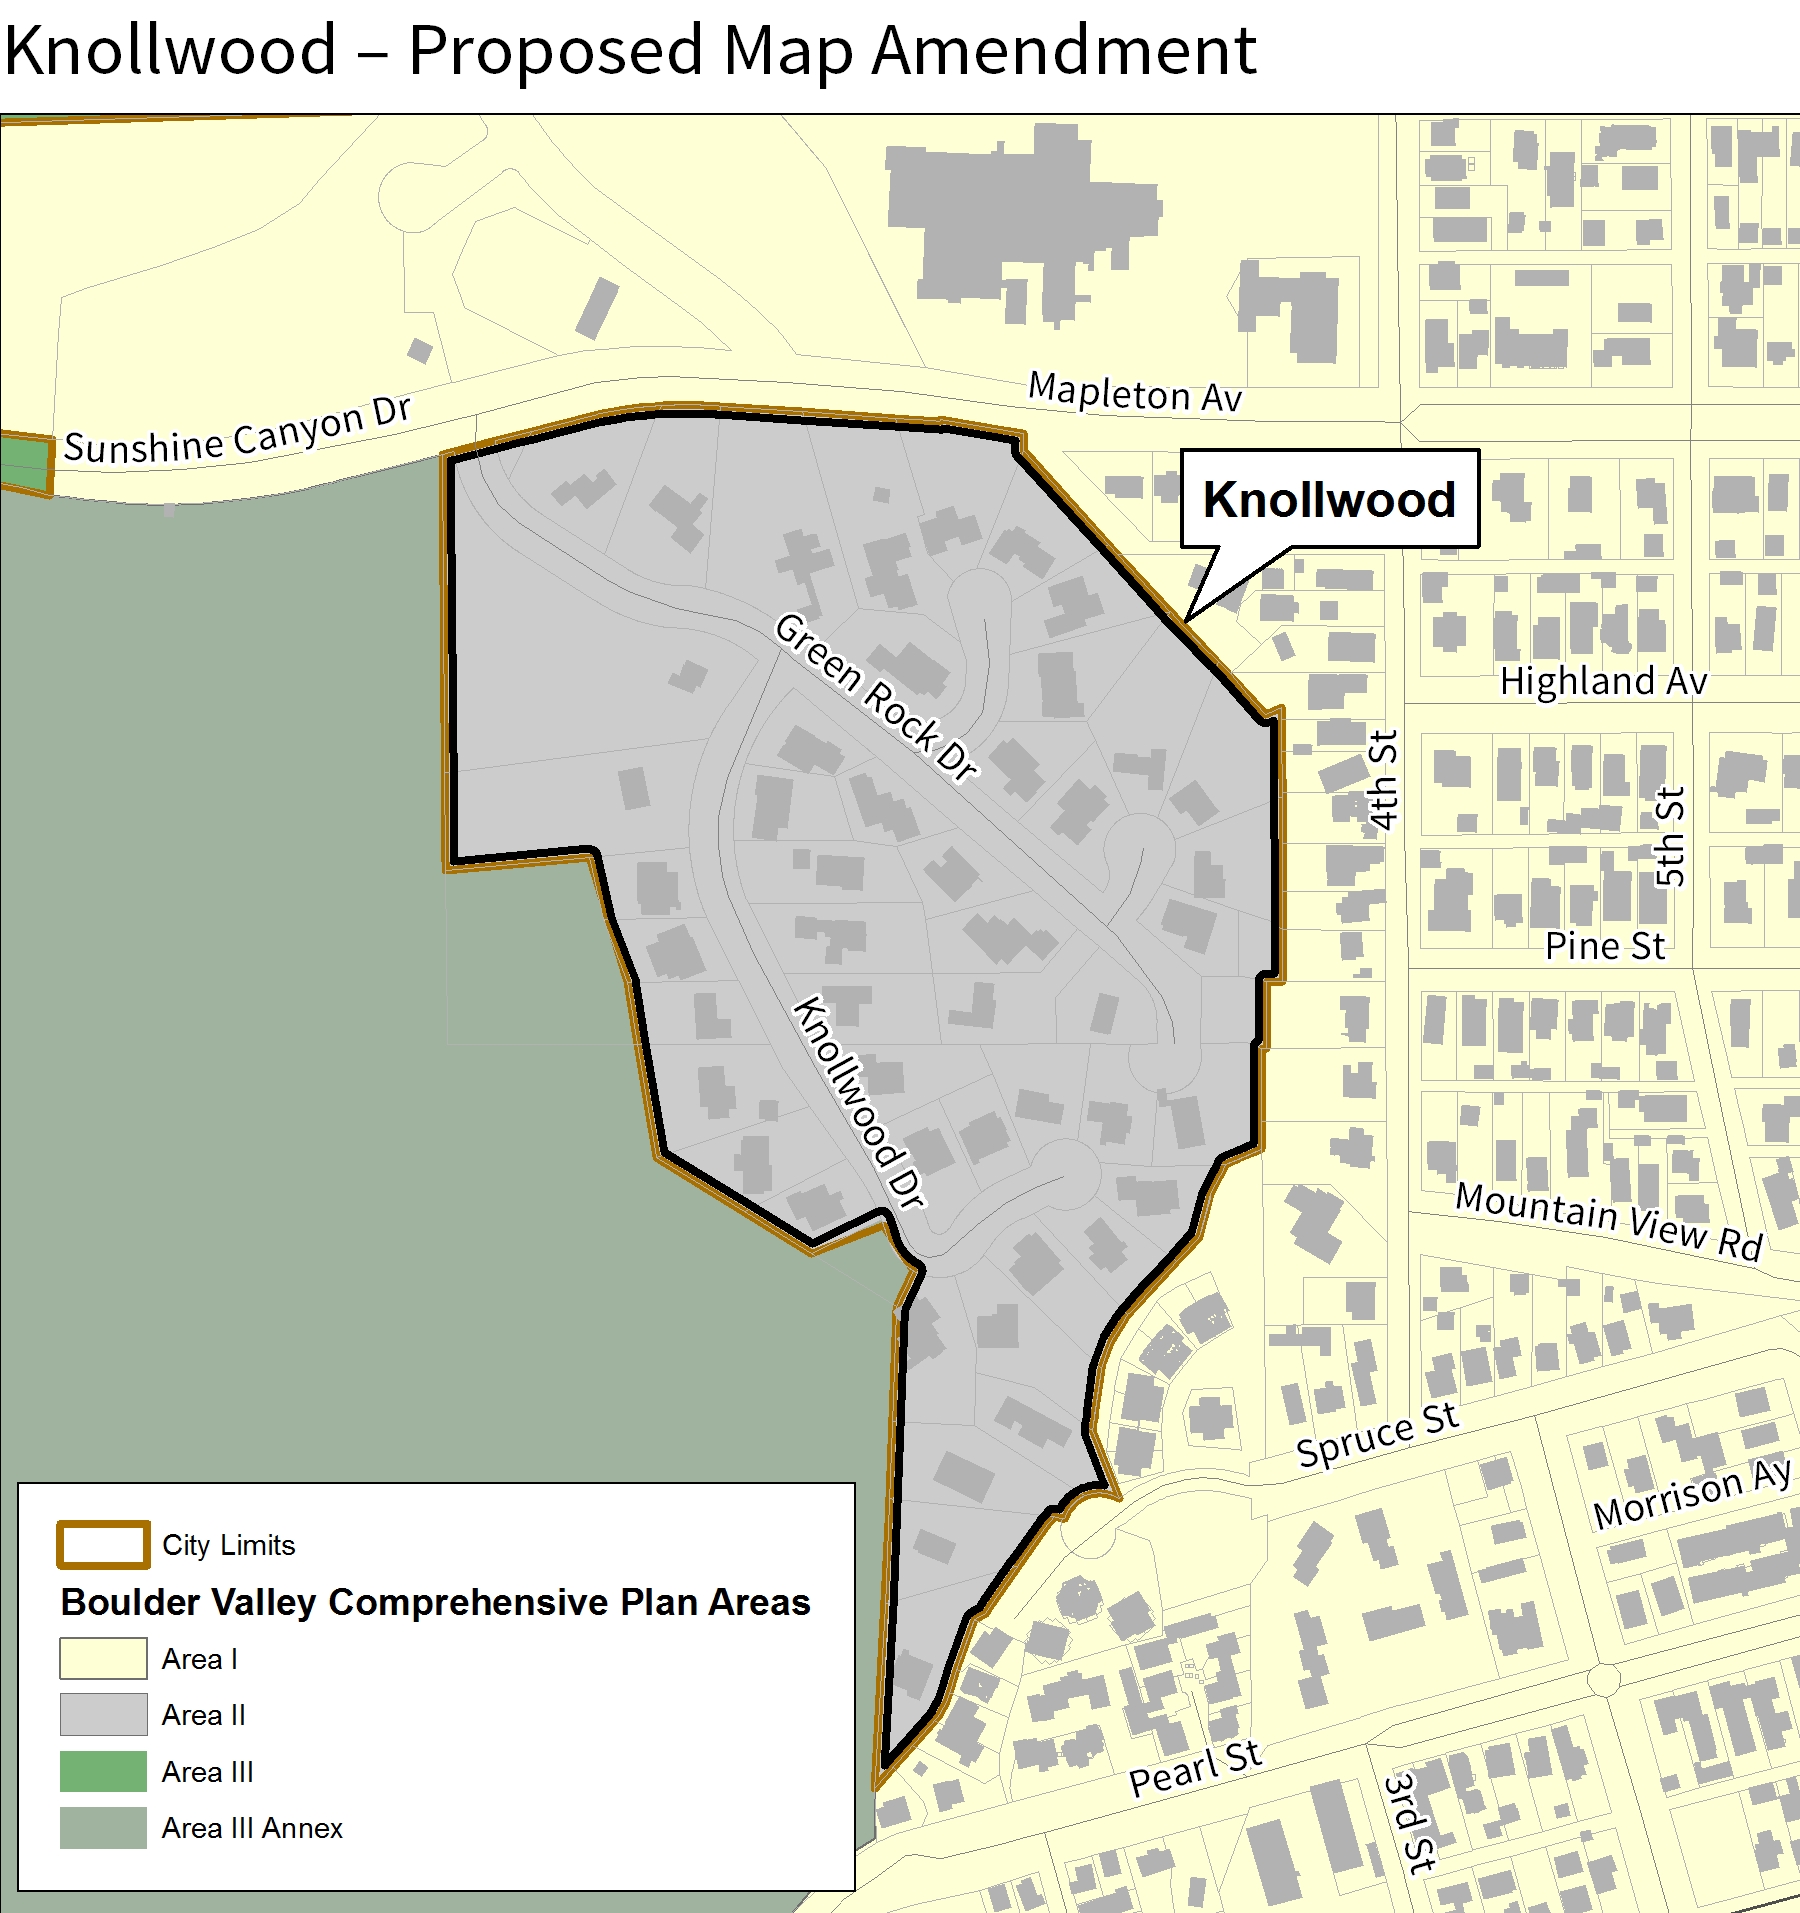 Proposed Planning Area Designation: Area II